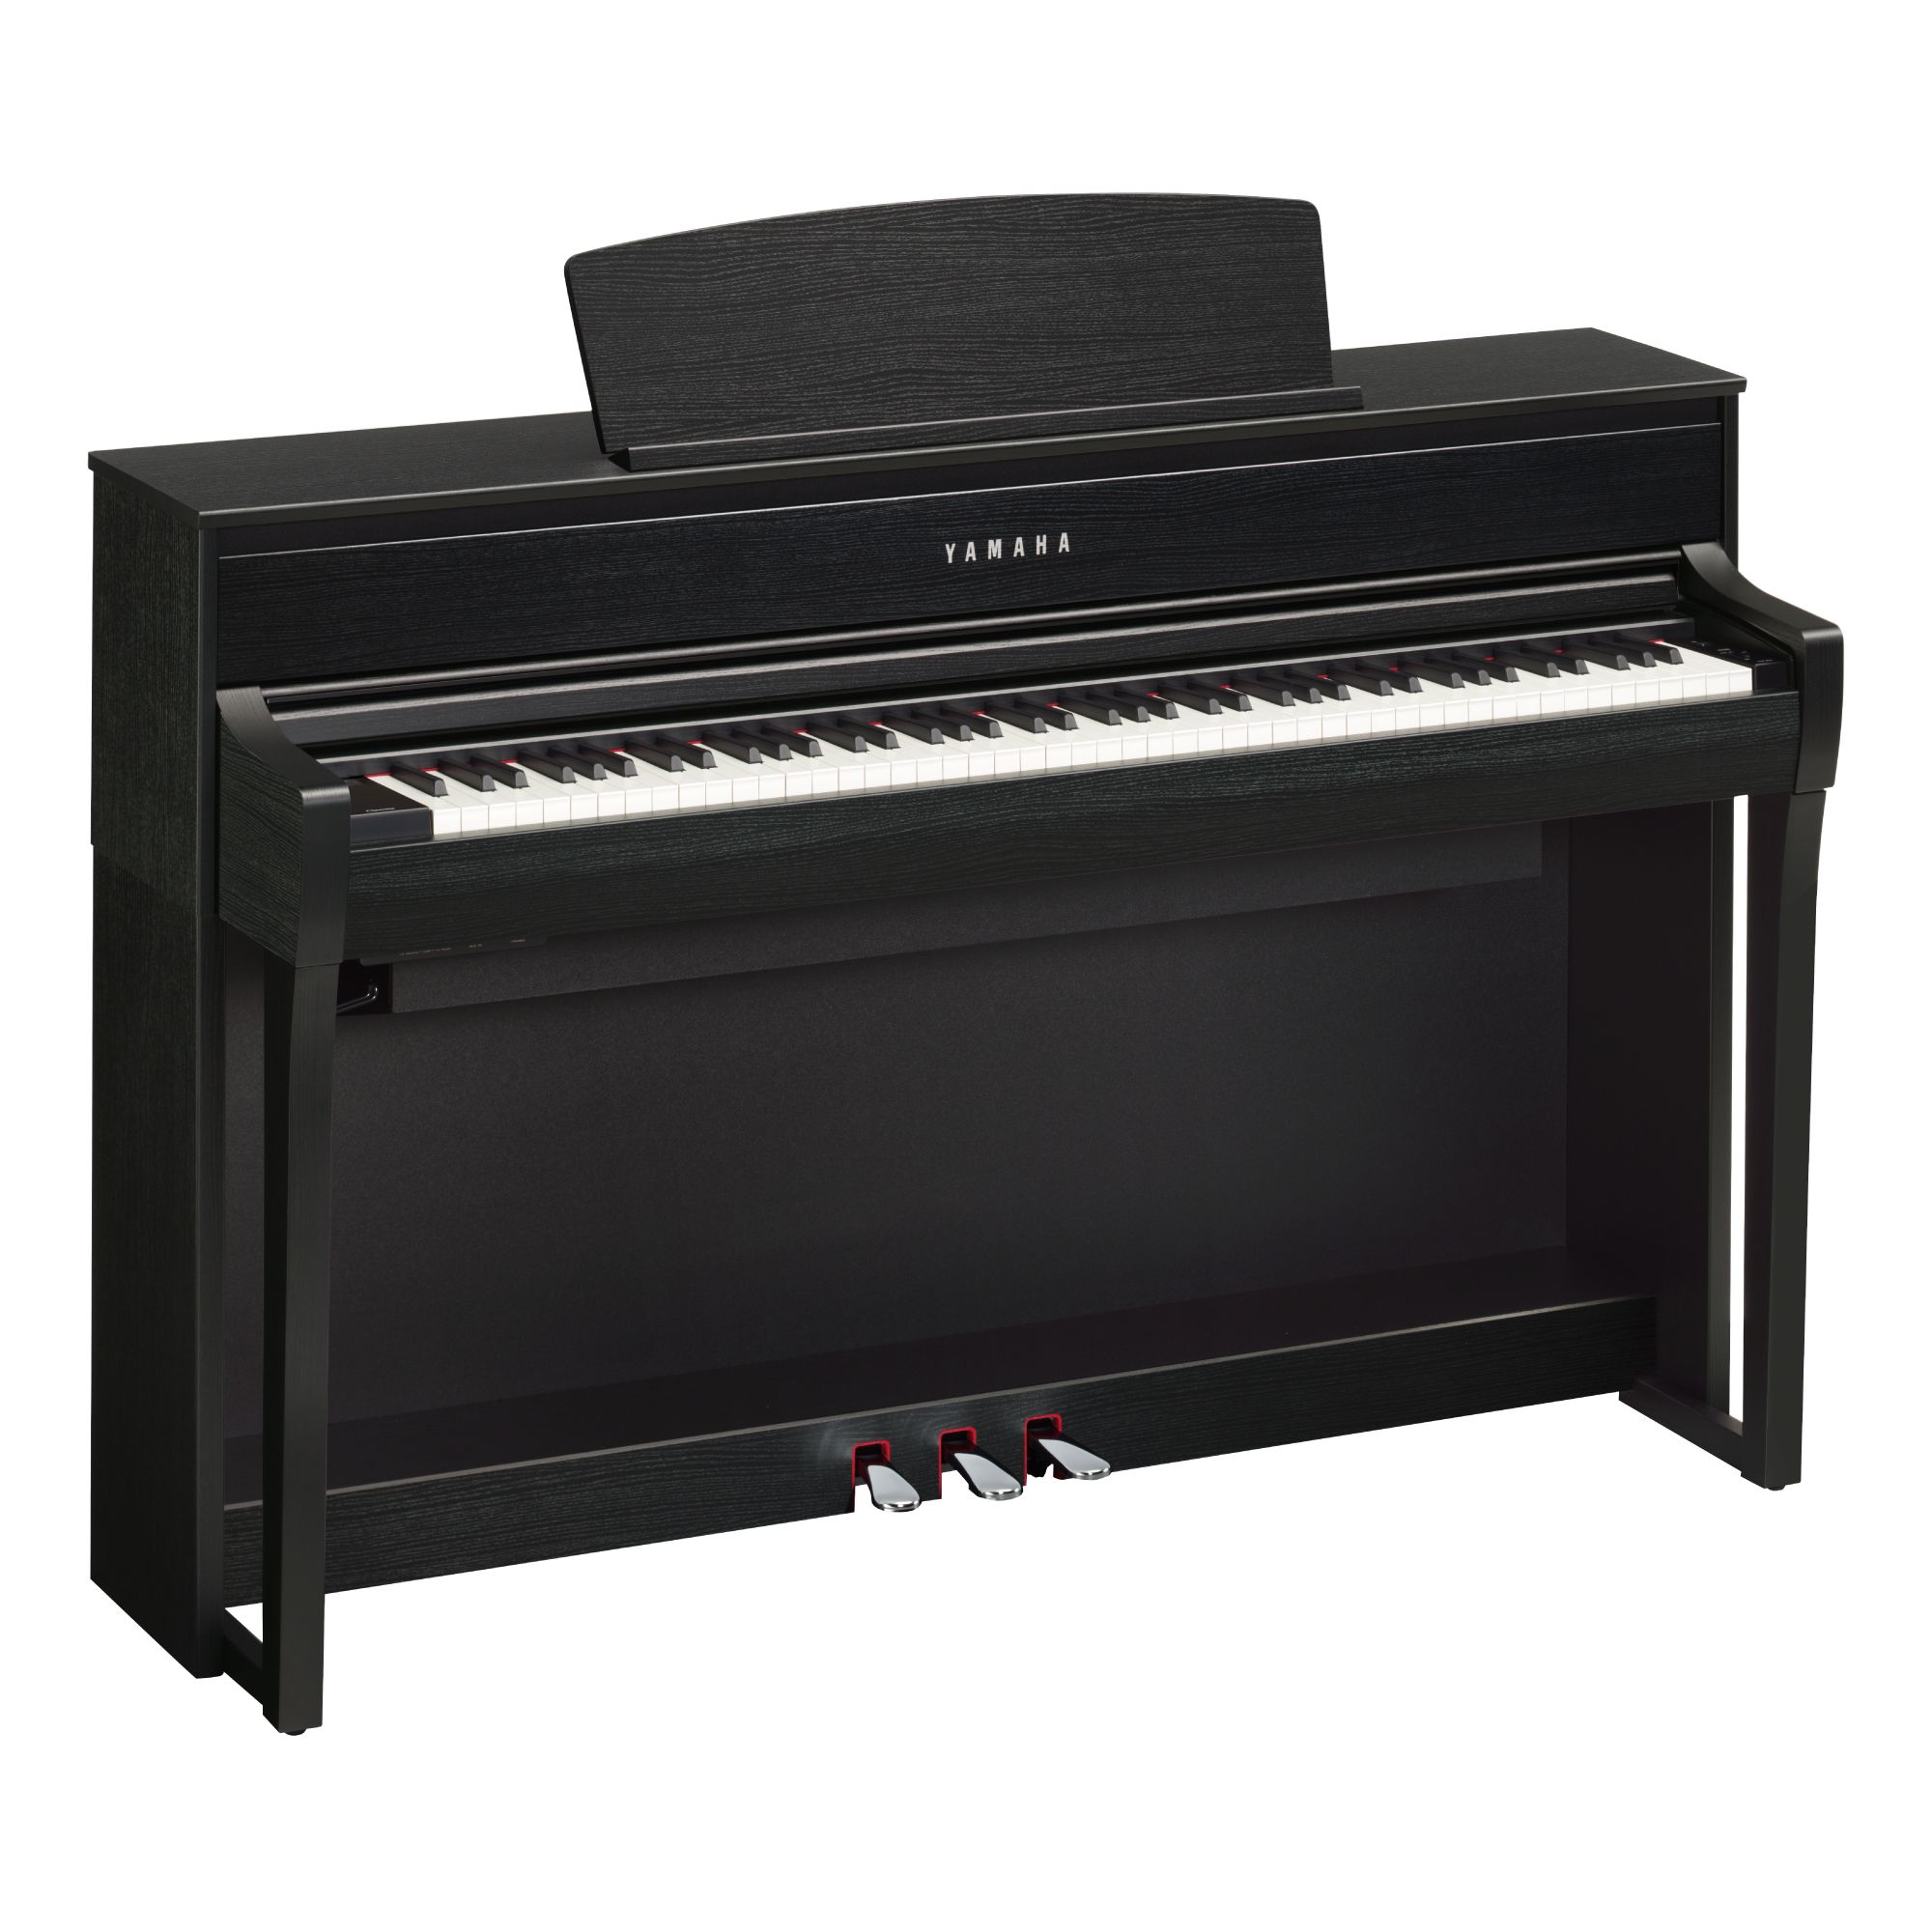 Clavinova - Pianos - Musical Instruments - Products - Yamaha 